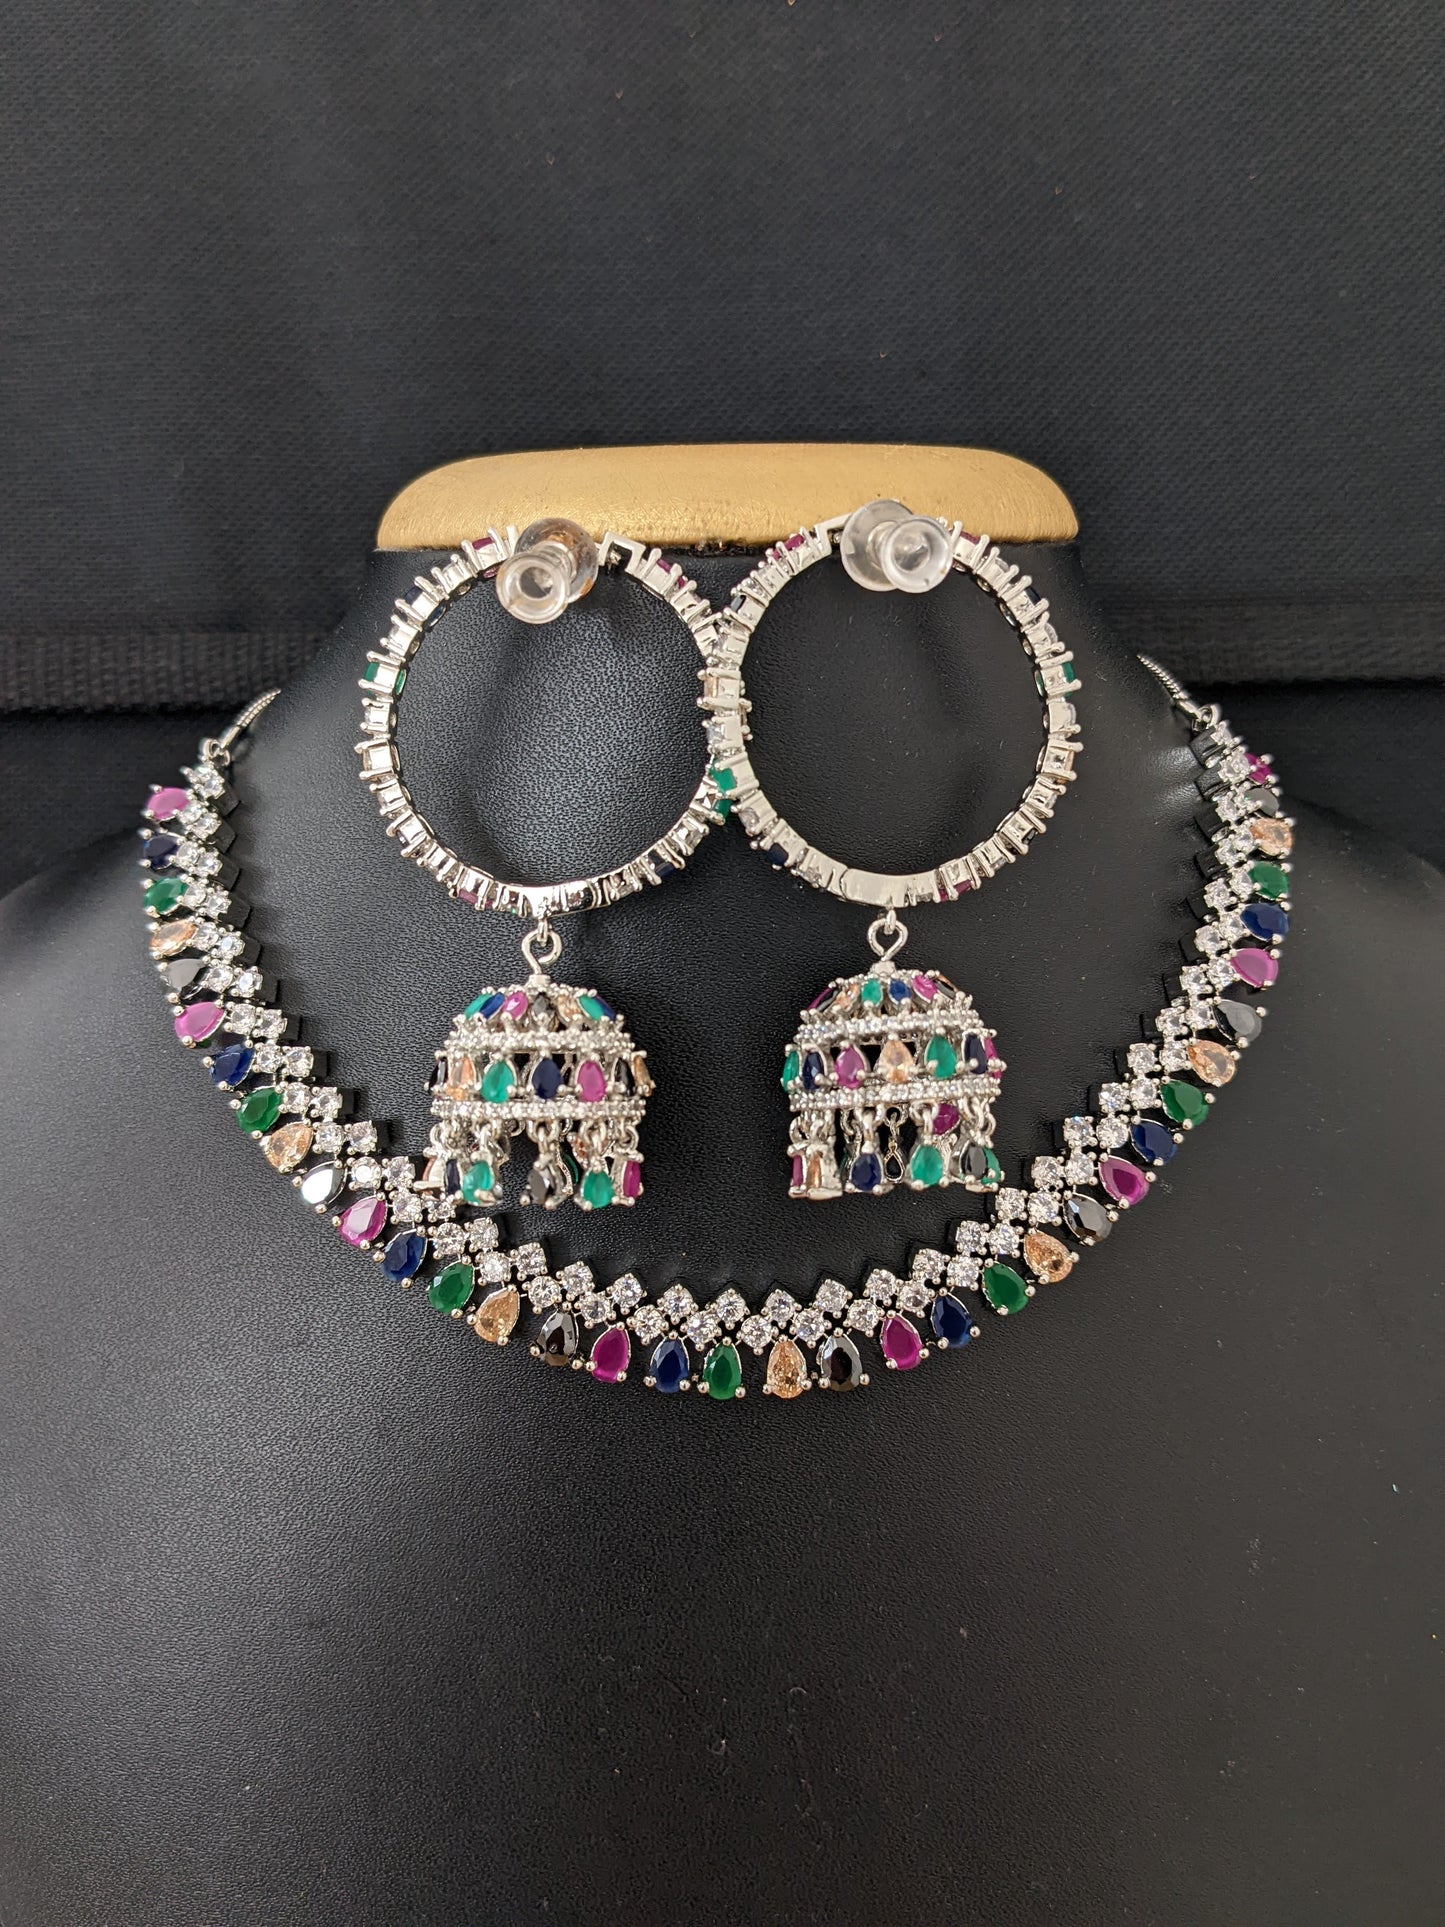 Diamond look alike Choker Necklace set - Design 2